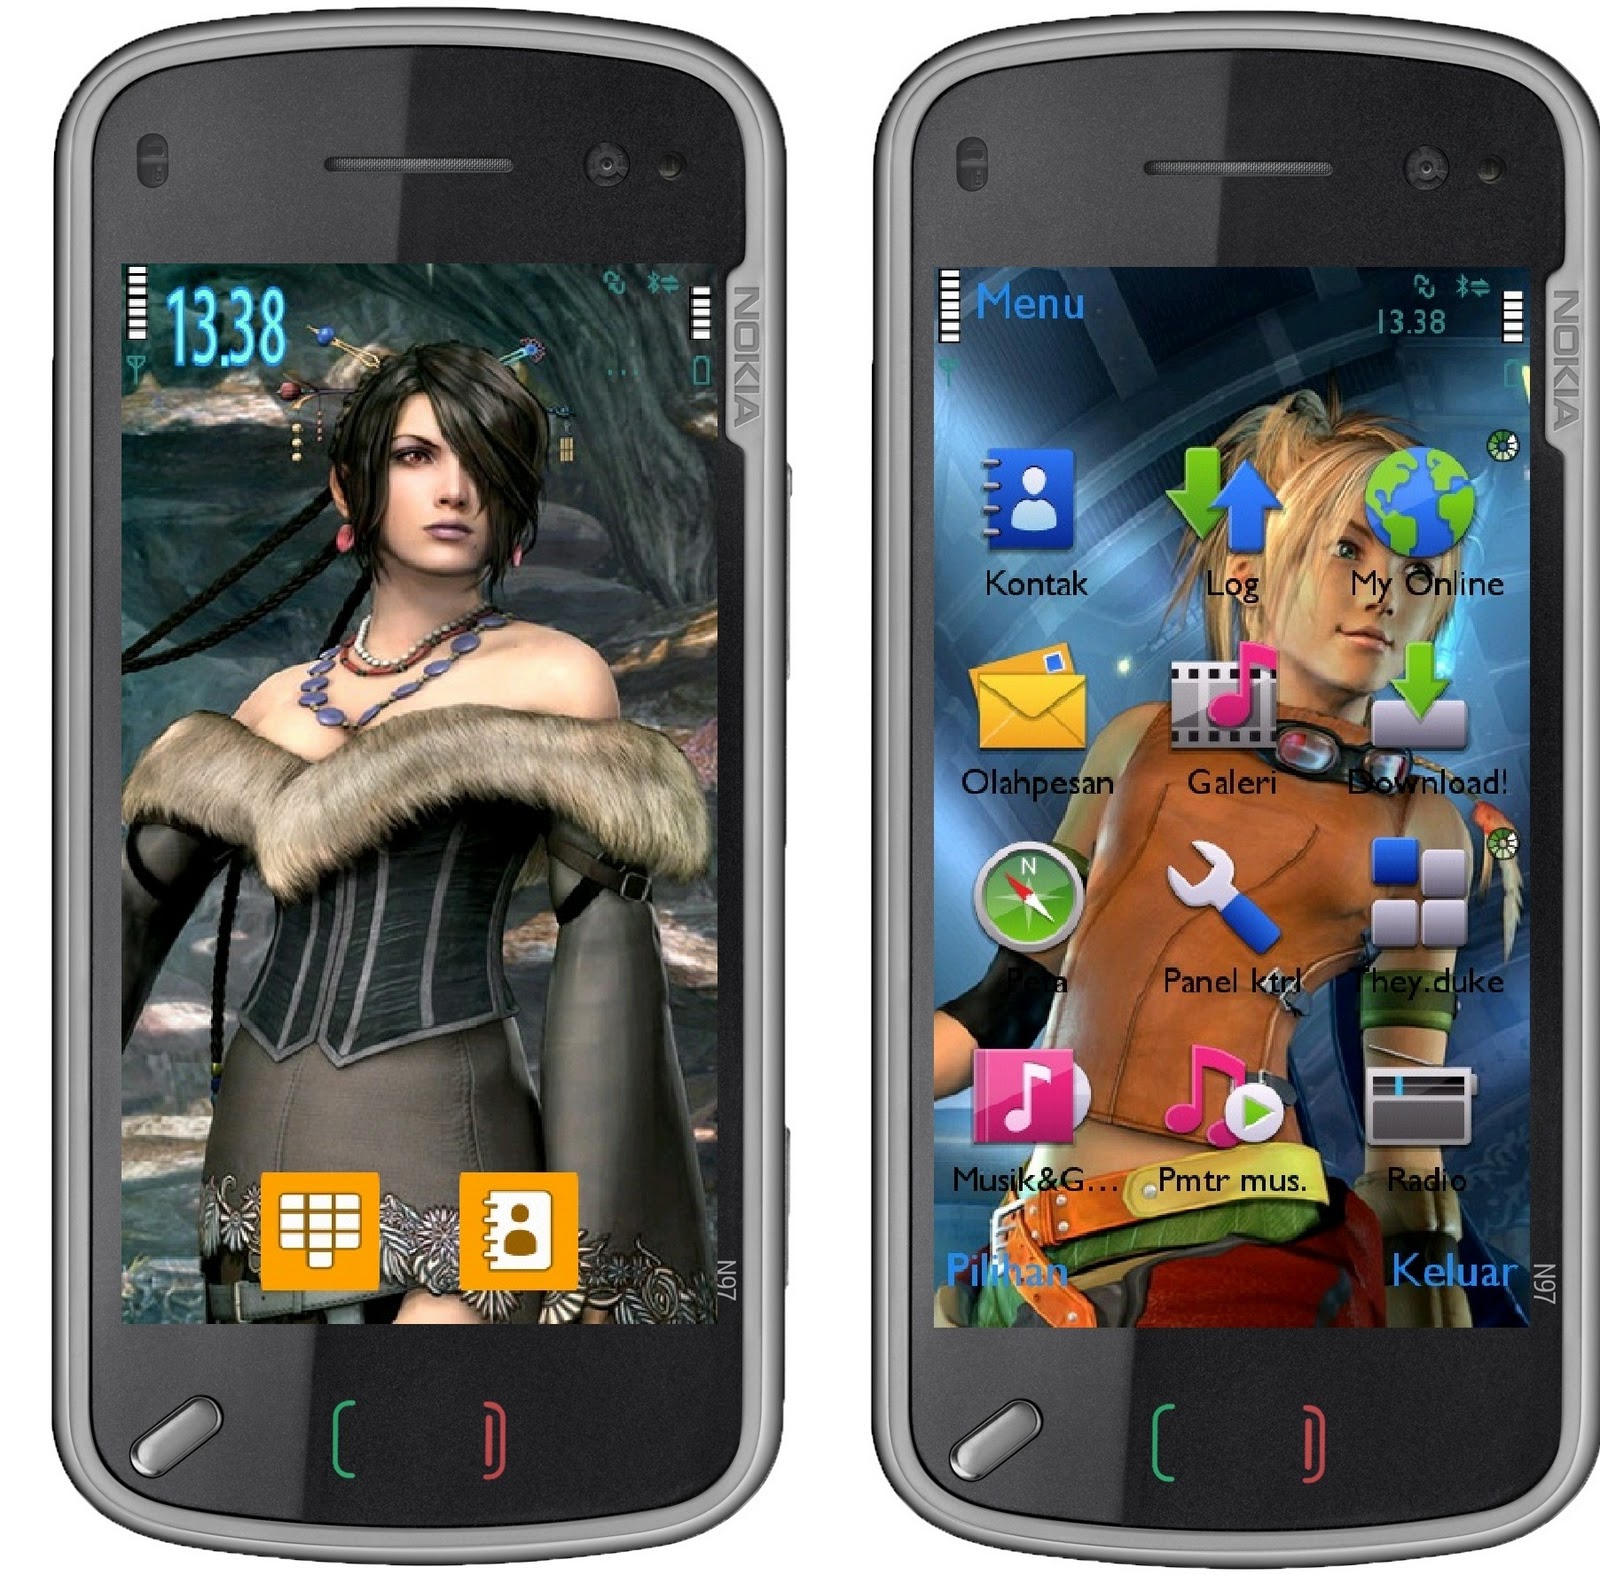 Girl theme for nokia Symbian S60v5 (5800,5230,5228,5235,5530,5233,X6